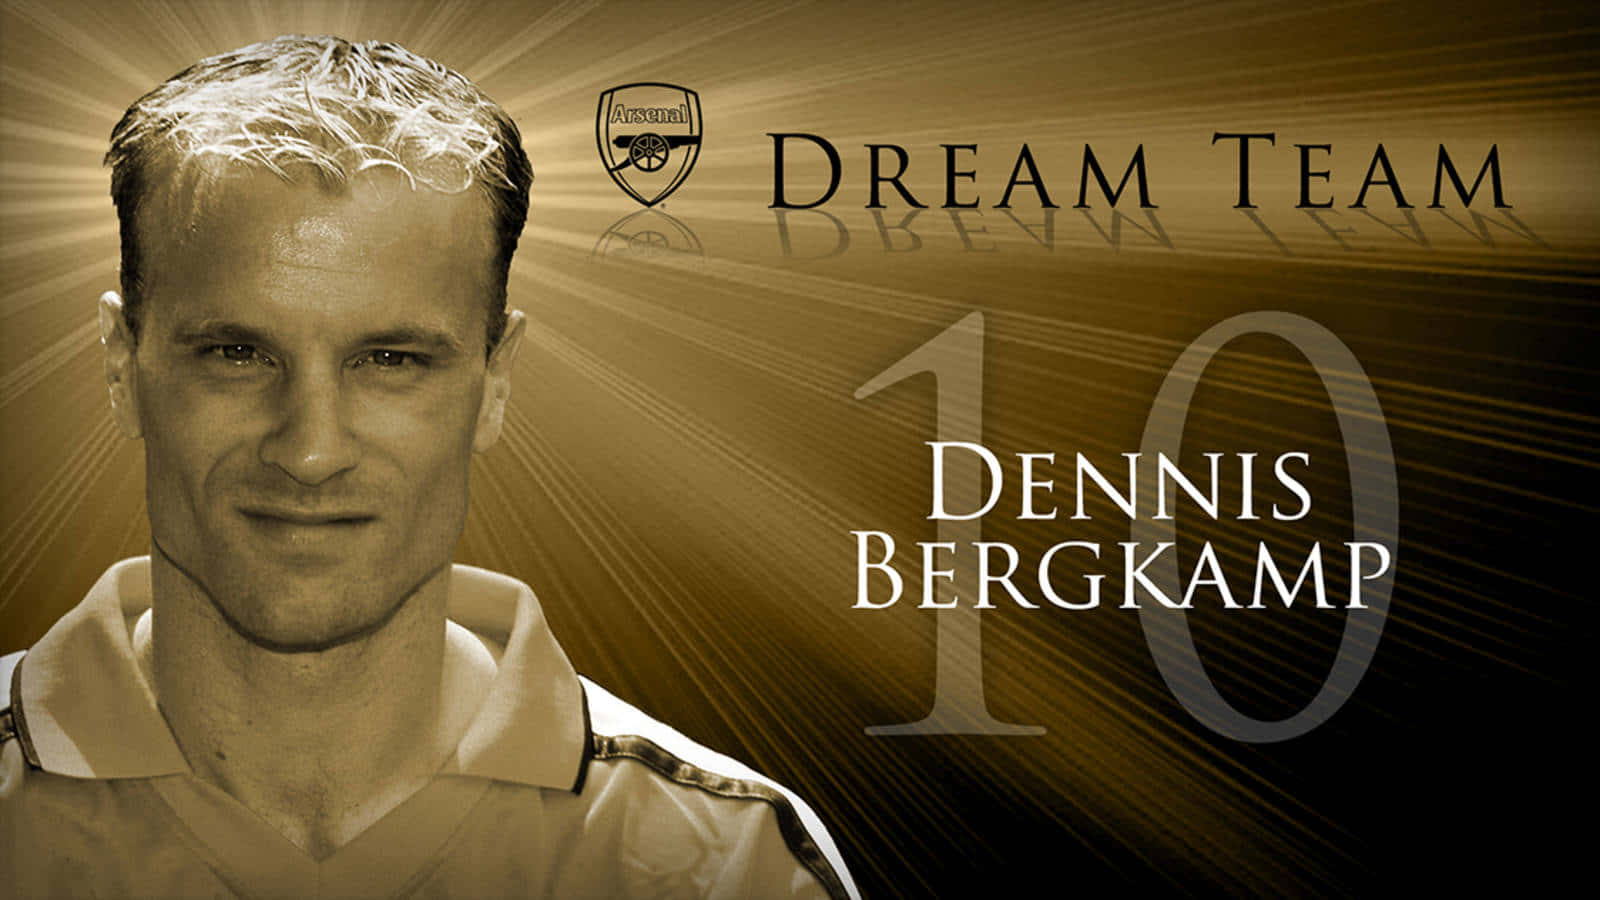 Dennisbergkamp Arsenal Traumteam. Wallpaper